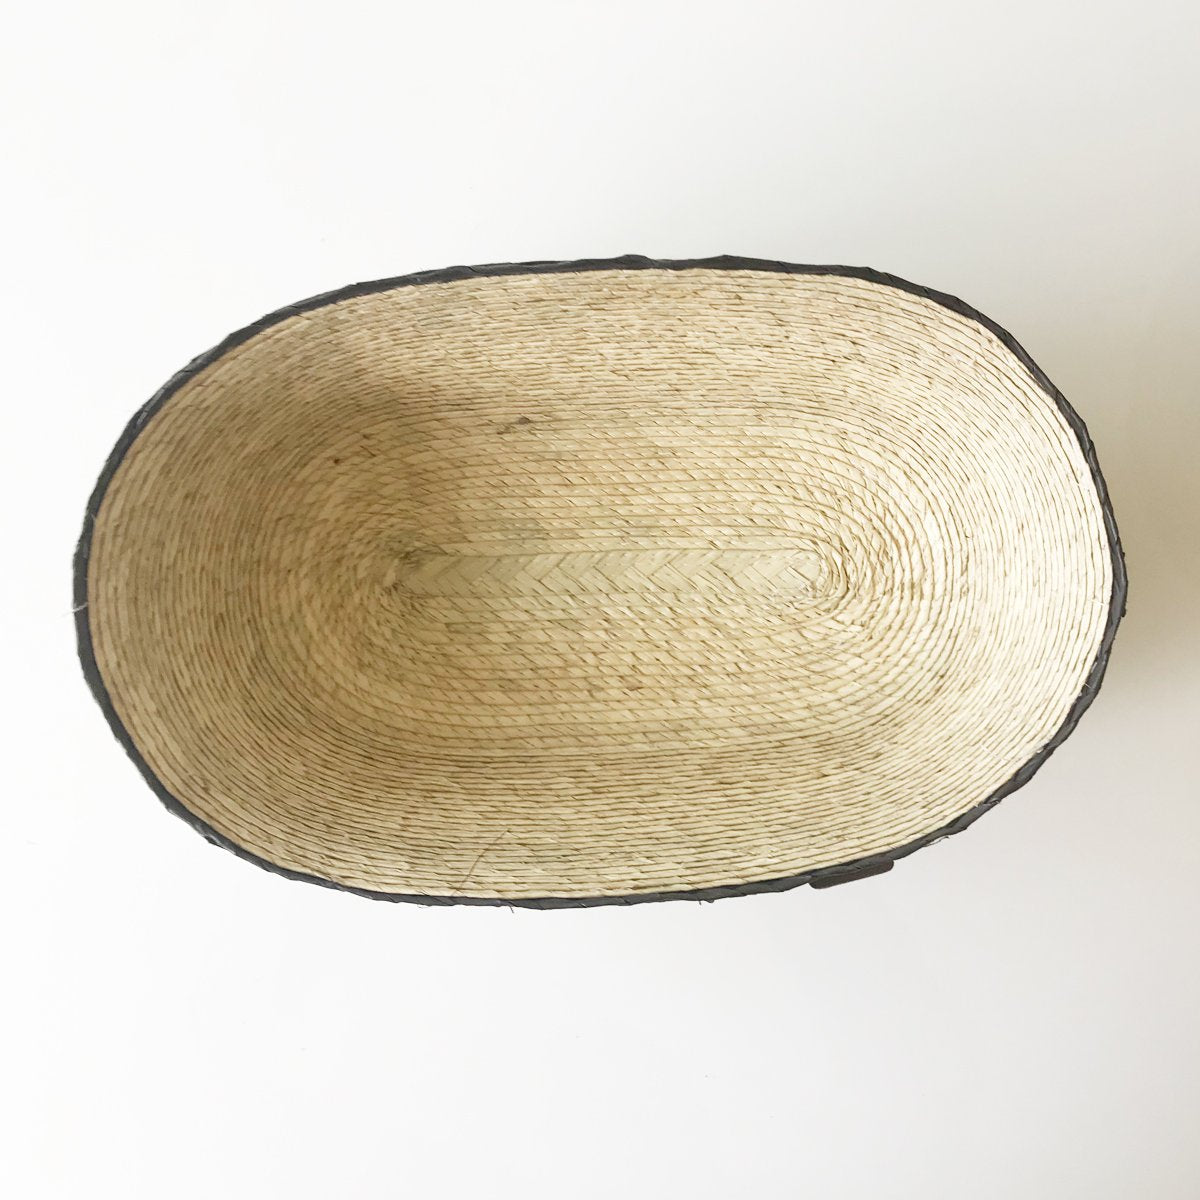 Oval Palm Basket - Natural w/ Black Stripe